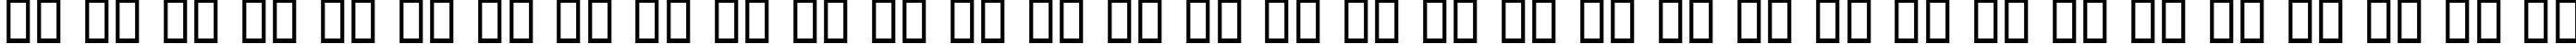 Пример написания русского алфавита шрифтом Aharoni Bold